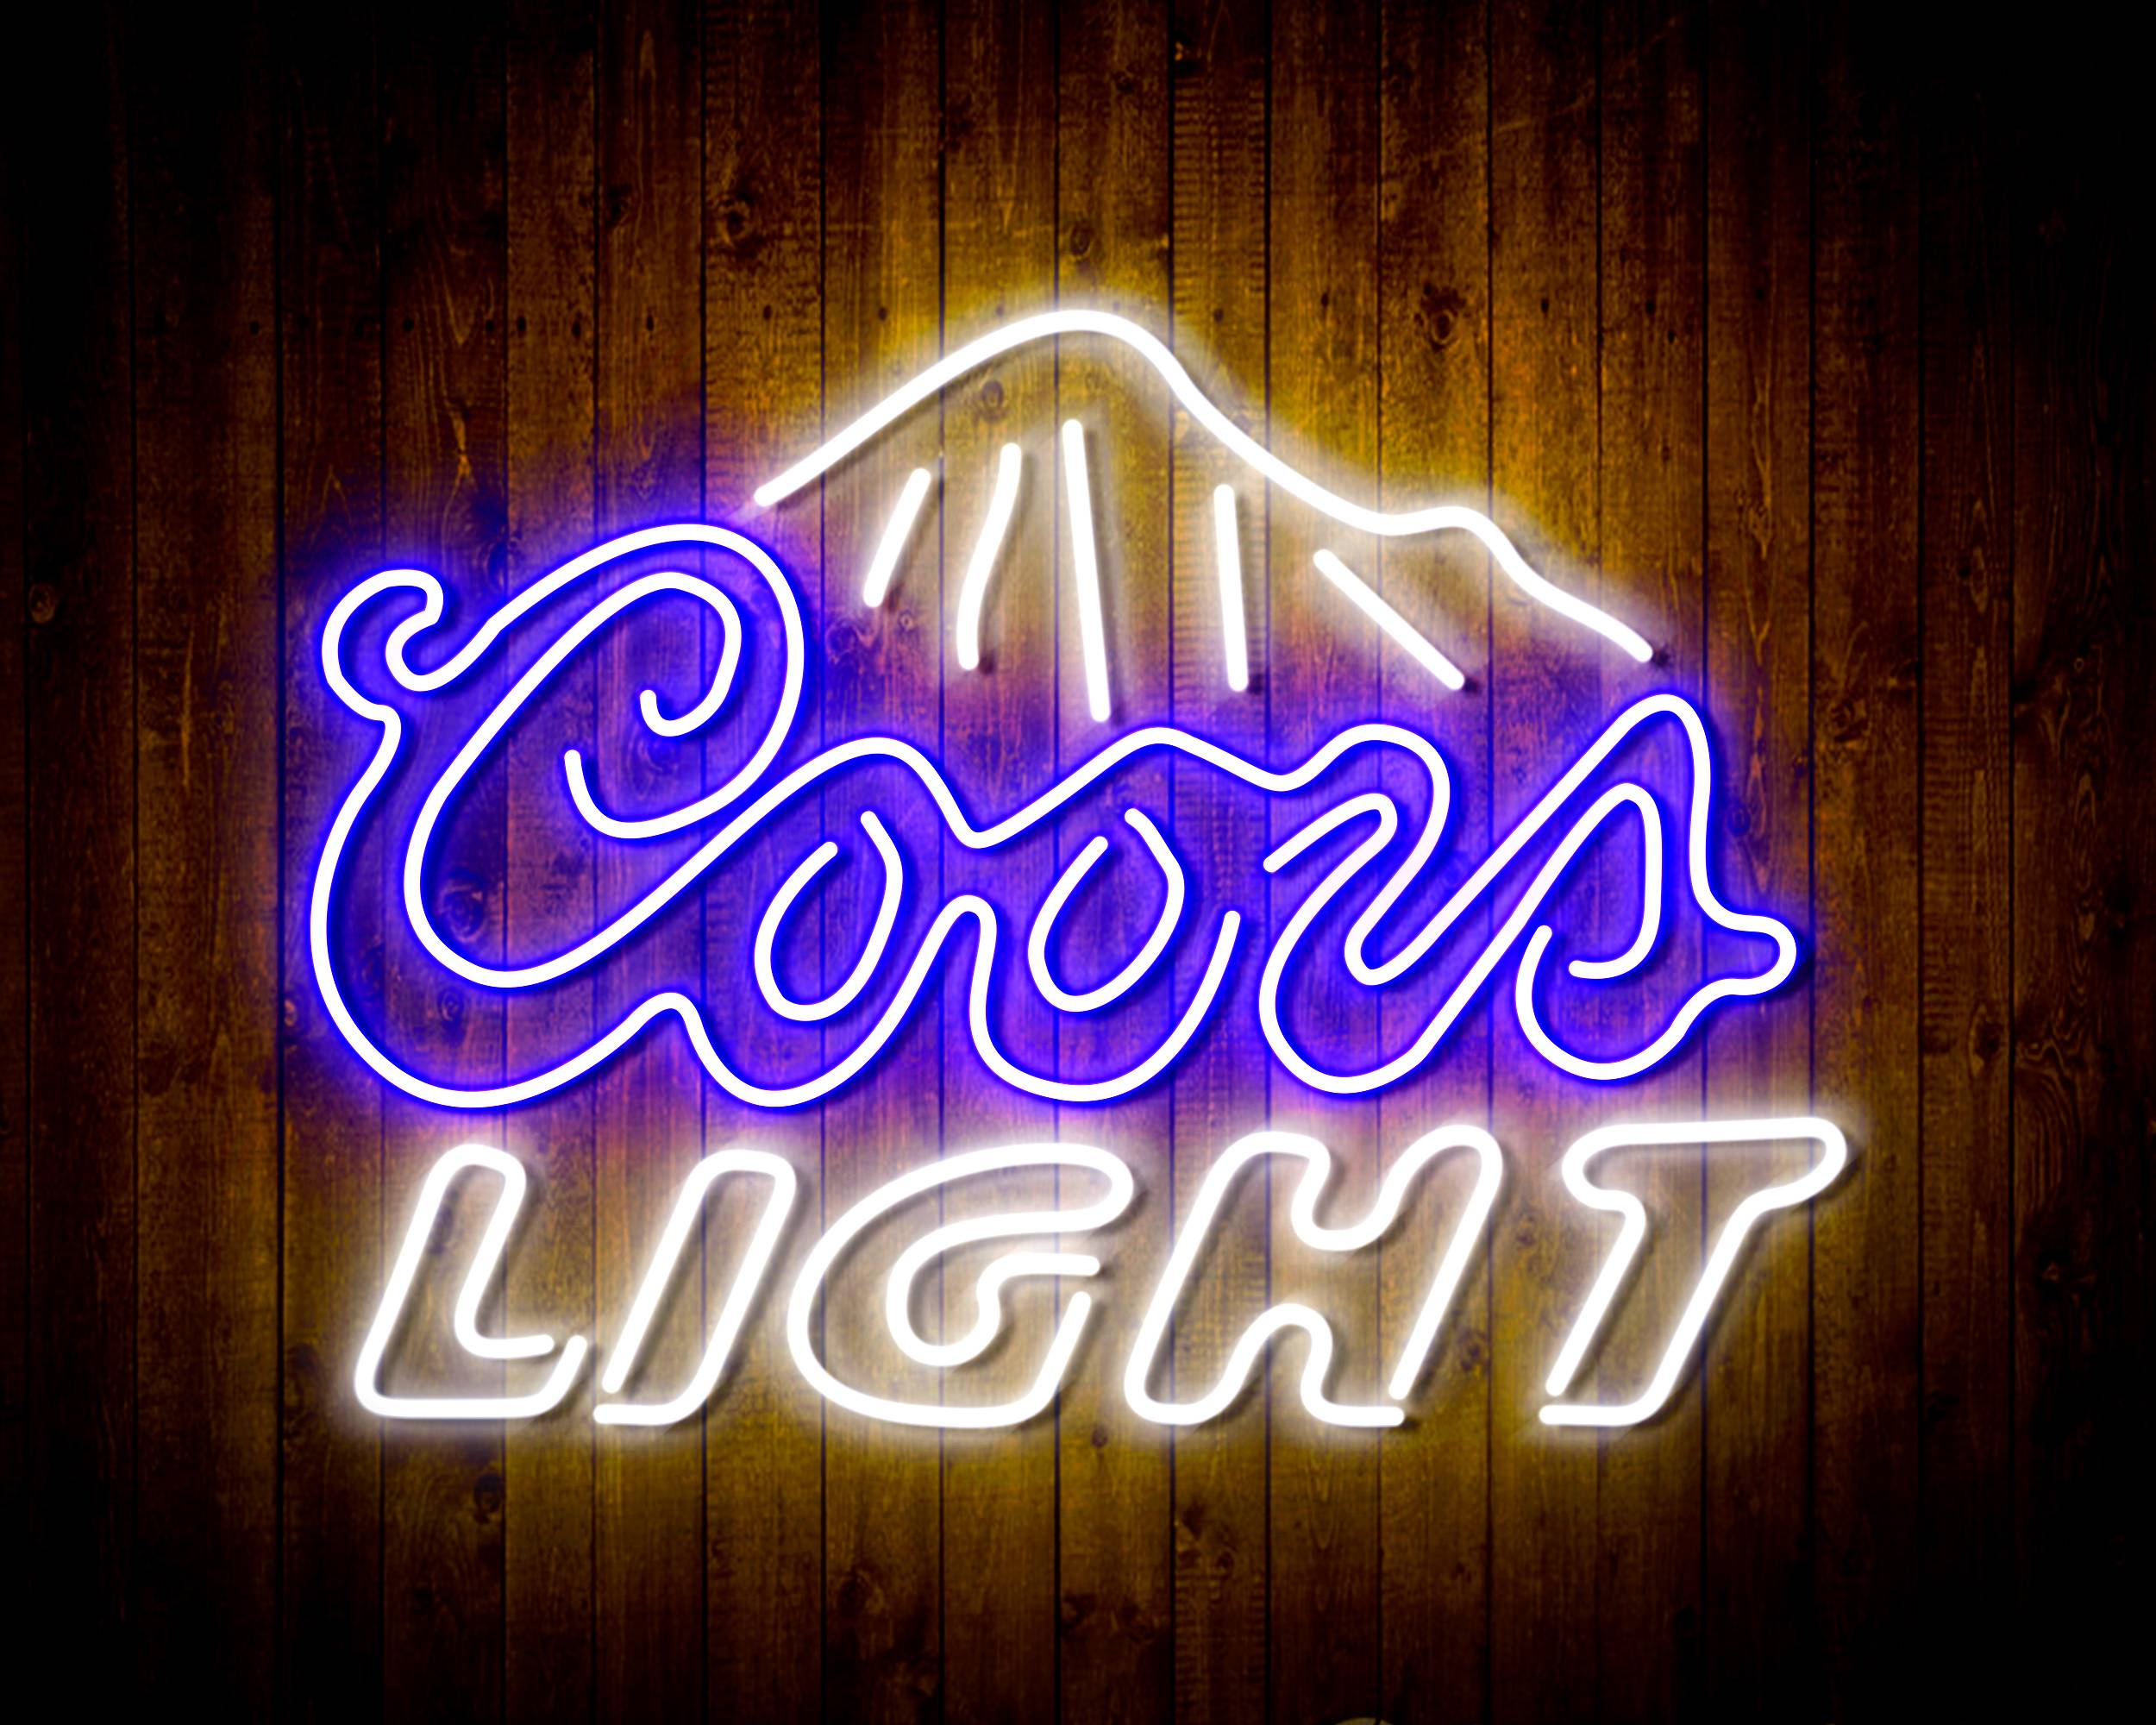 Coors Light Bar Neon LED Sign